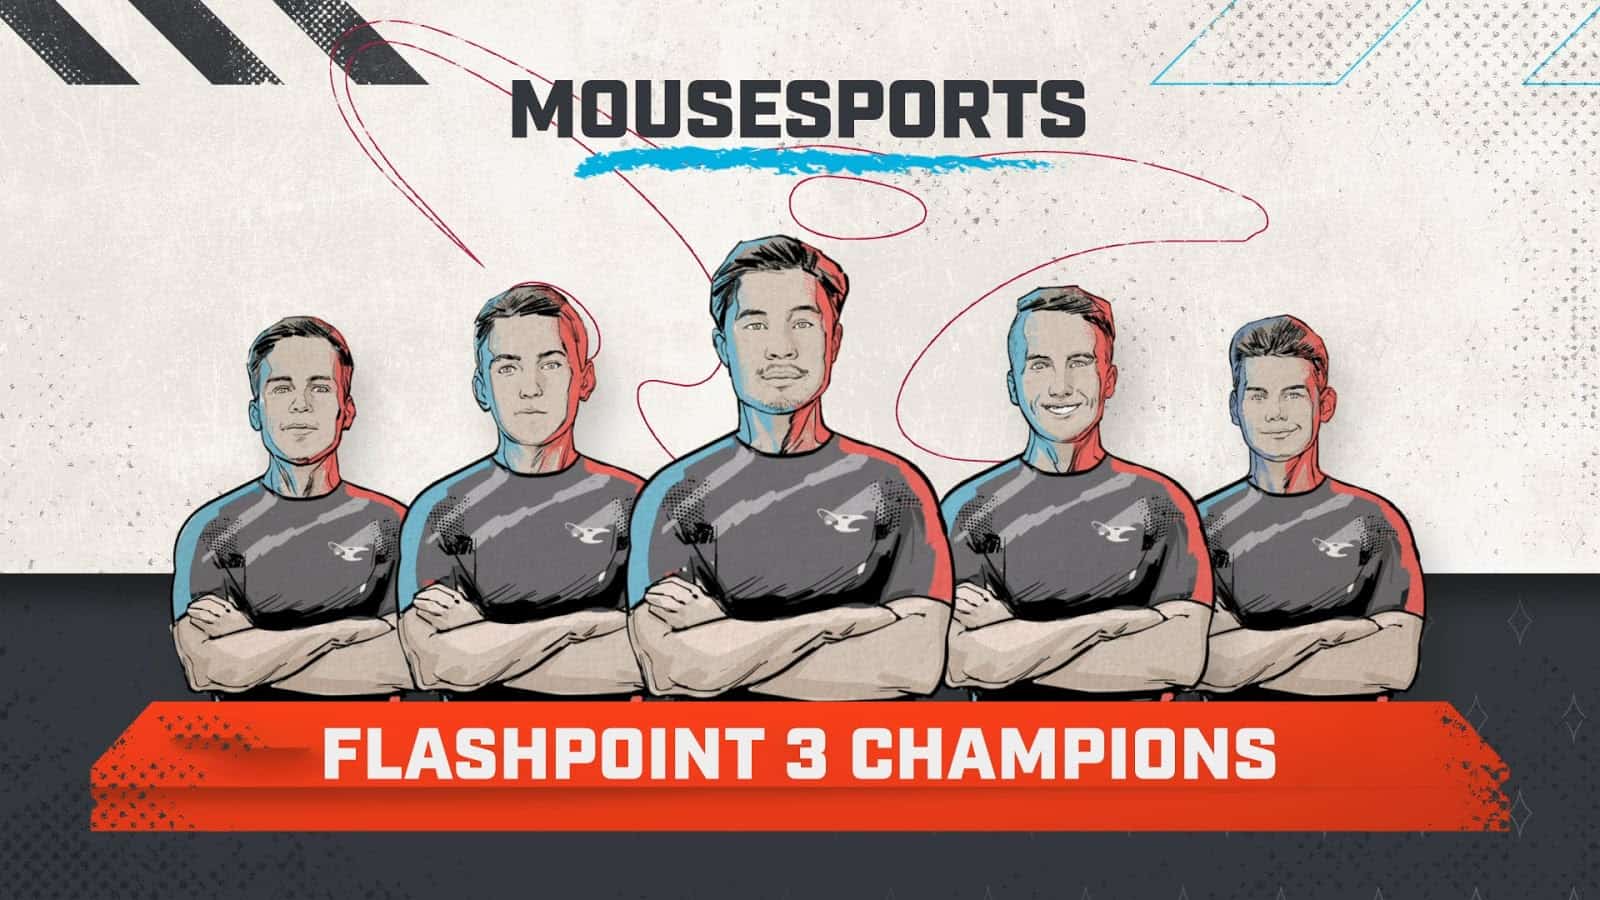 CS:GO: Mousesports Trump NiP To Win Flashpoint 3